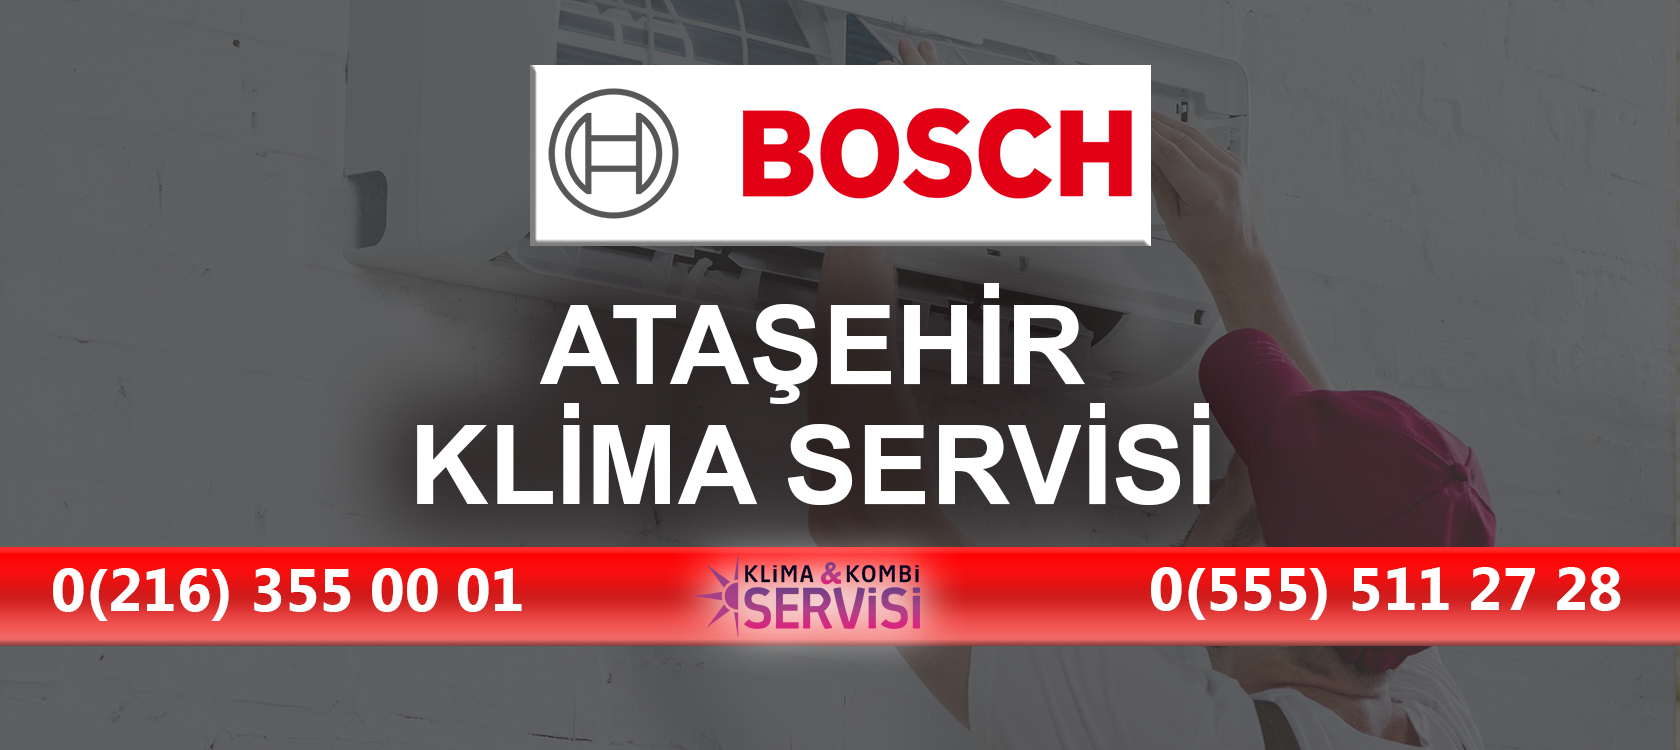 Ataşehir Bosch Klima Servisi